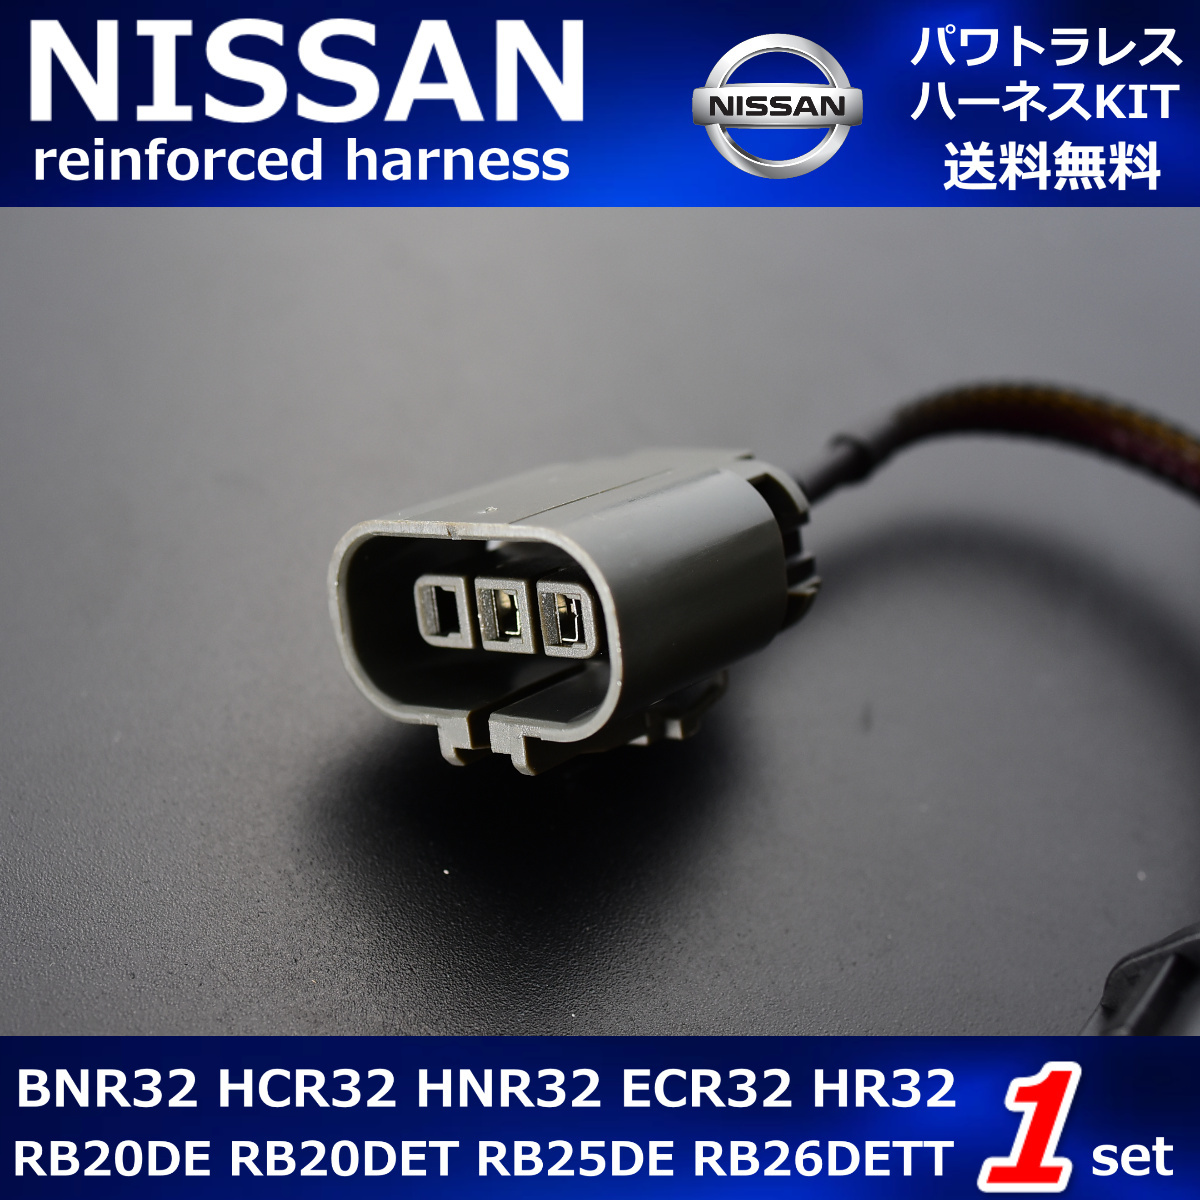  Nissan Skyline GT-R R32 BNR32 HCR32 HNR32 ECR32 HR32 RB26DETT power to RaRe s изменение Harness катушка зажигания A957